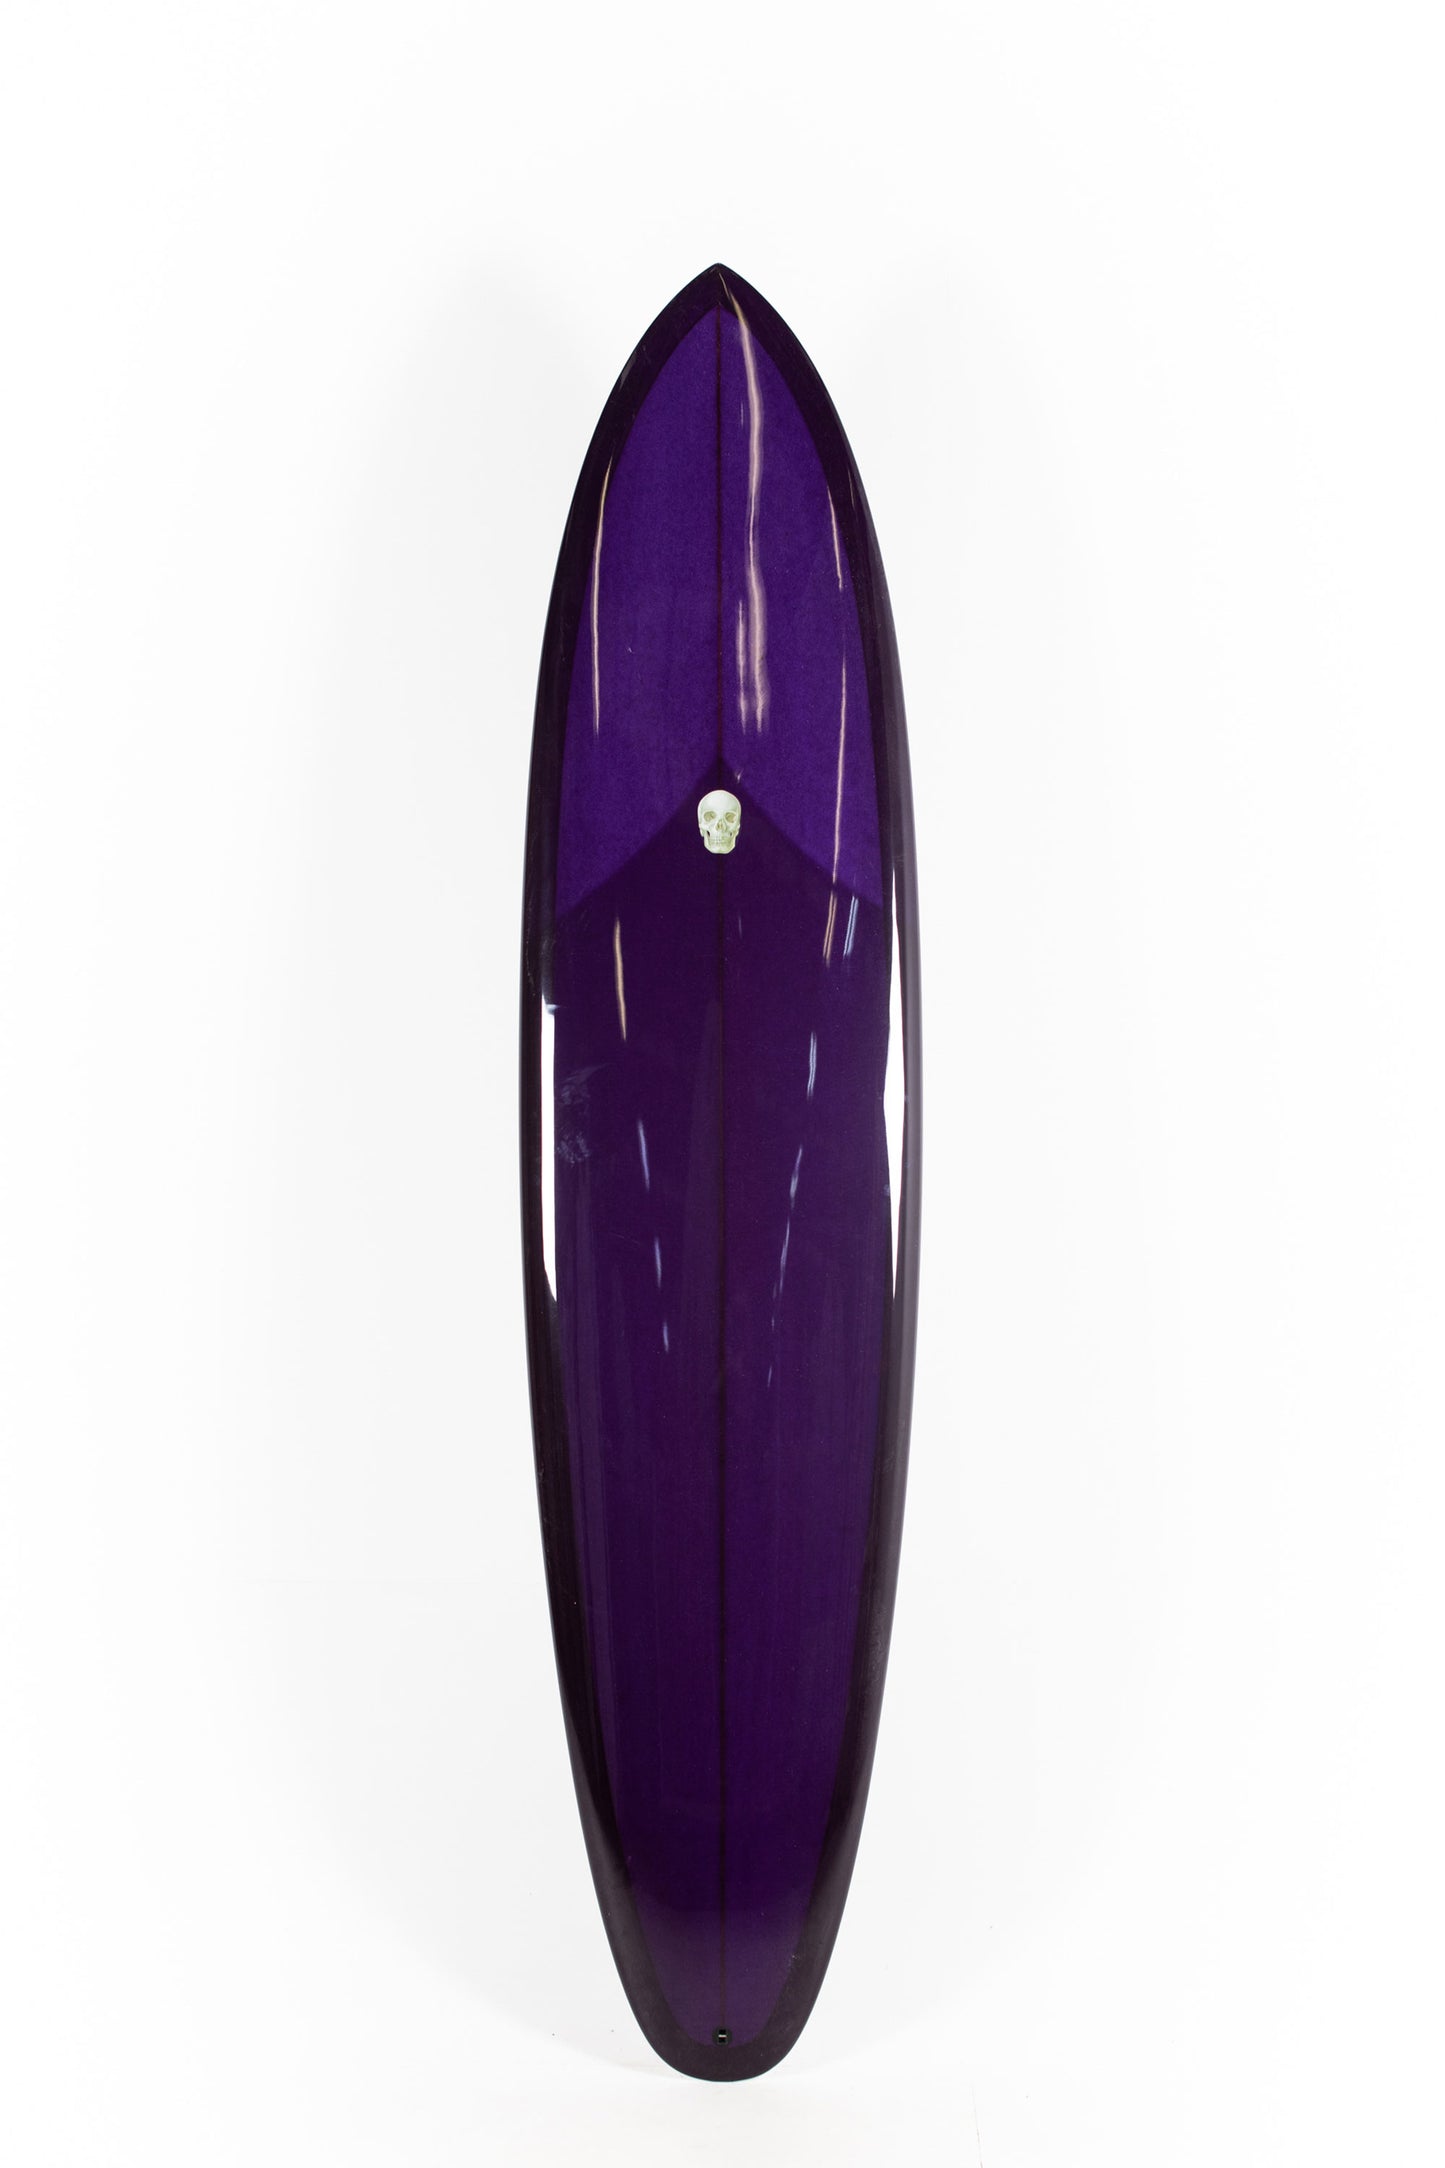 Christenson Surfboards - TWIN TRACKER - 8'0